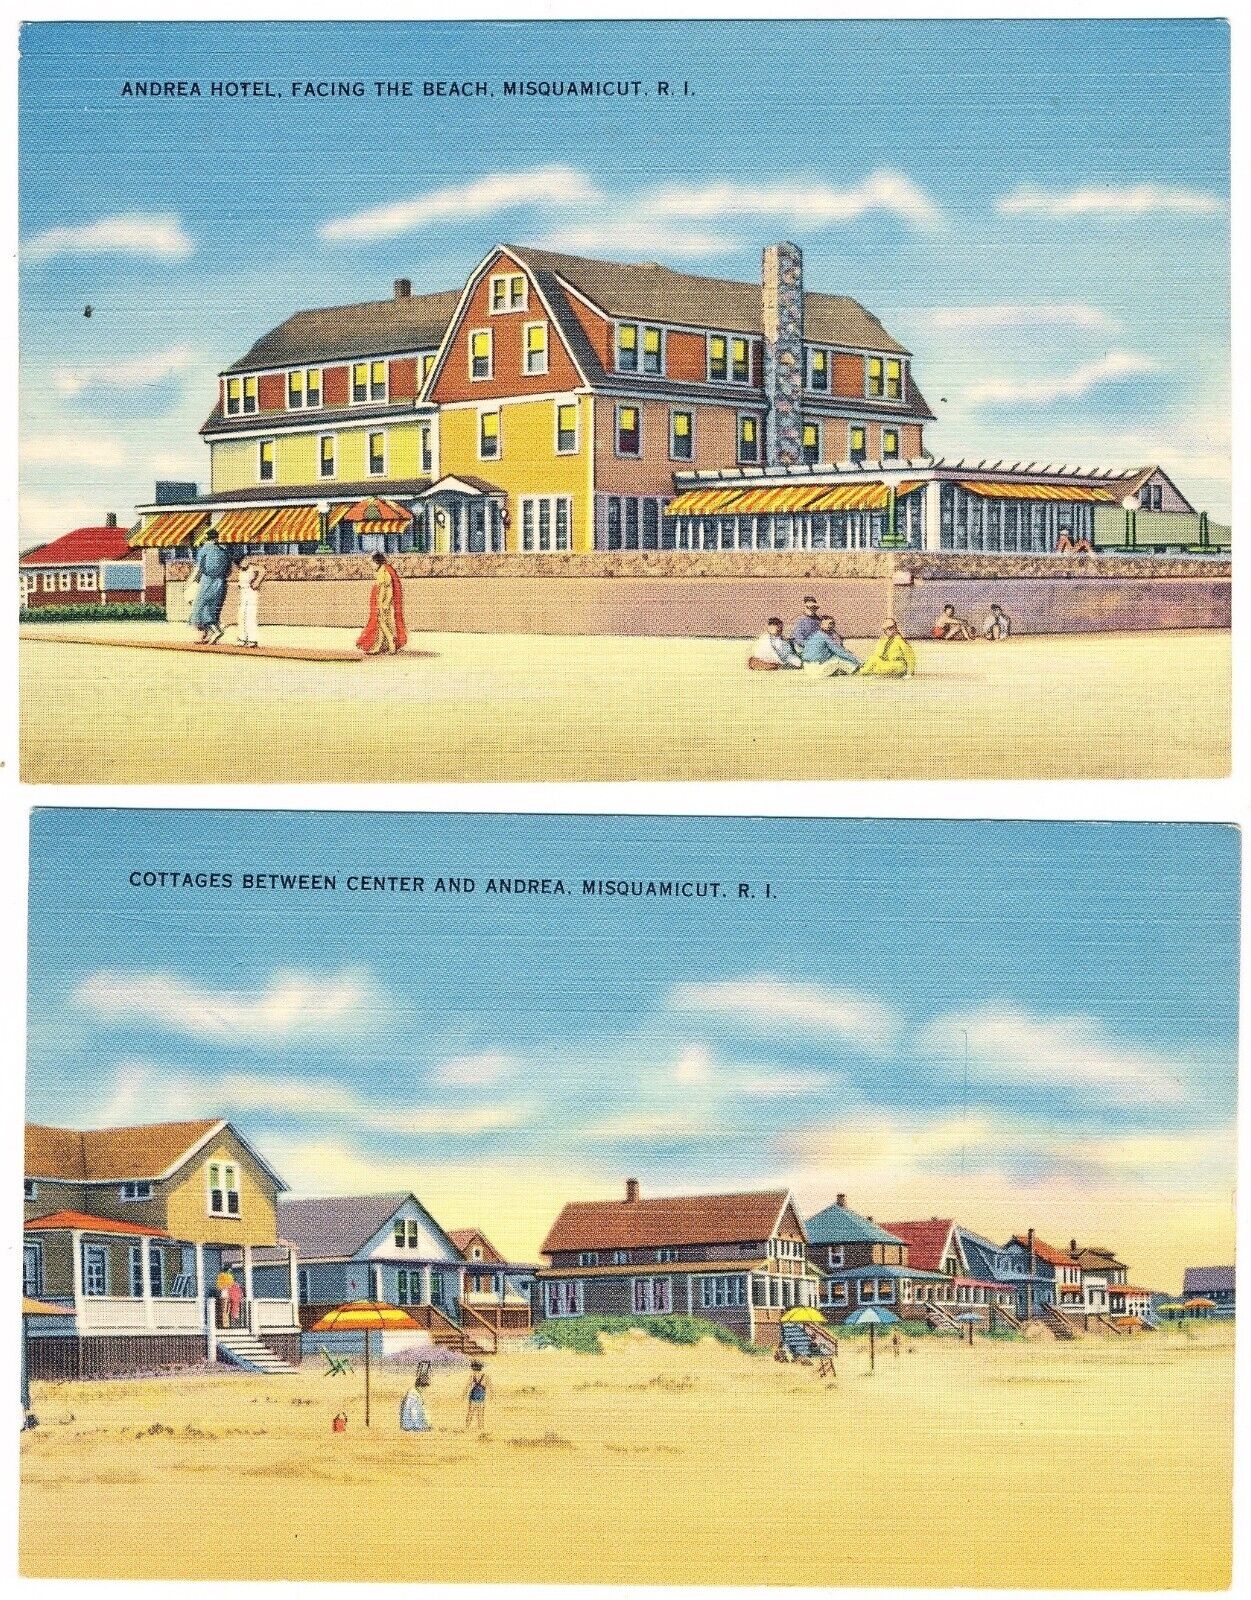 Lot of 2 Vintage Misquamicut RI Postcard-Andrea Hotel and Cottages